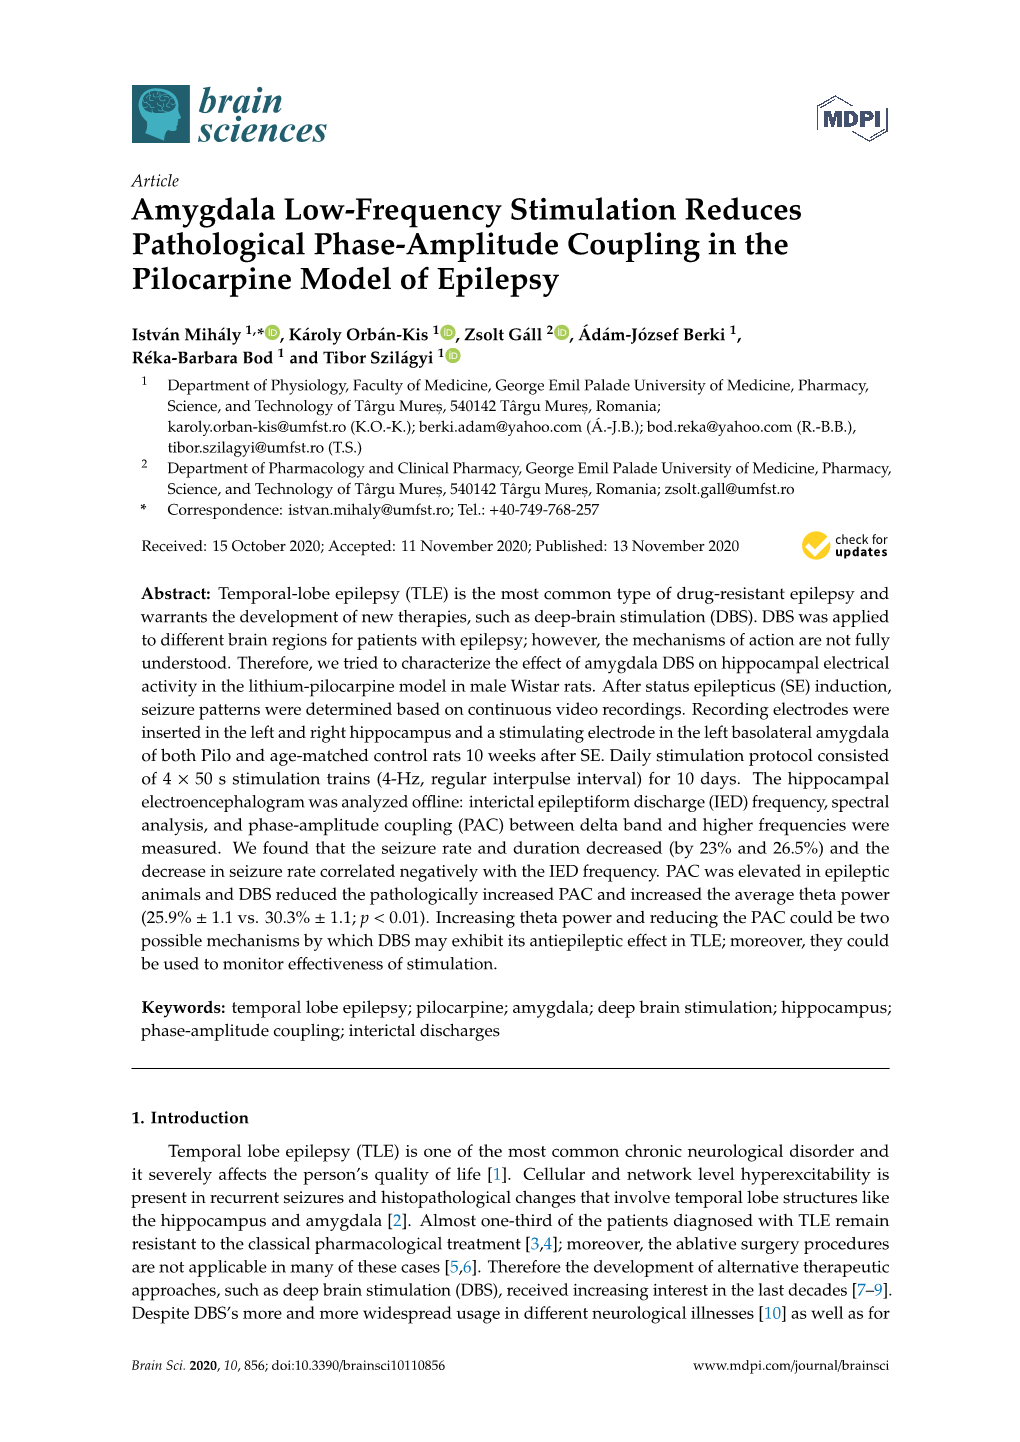 Amygdala Low-Frequency Stimulation Reduces Pathological Phase-Amplitude Coupling in the Pilocarpine Model of Epilepsy